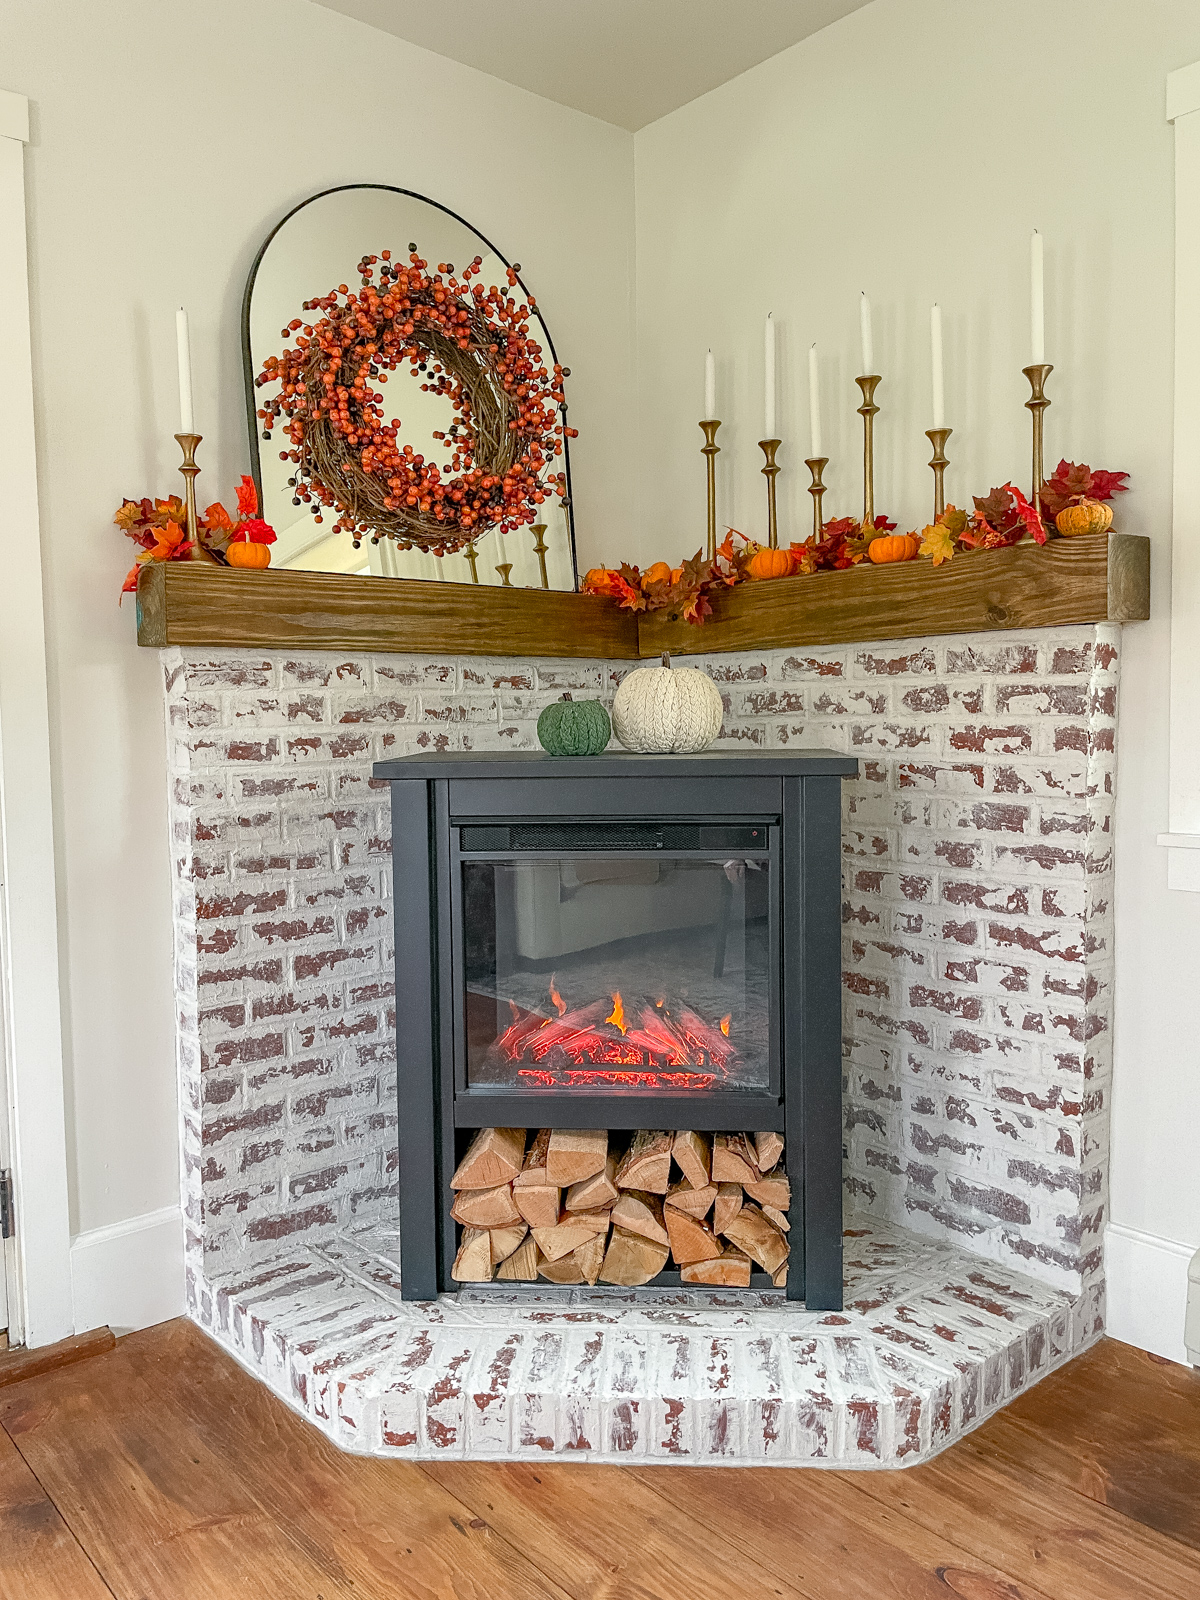 Corner stove fireplace with german schmear